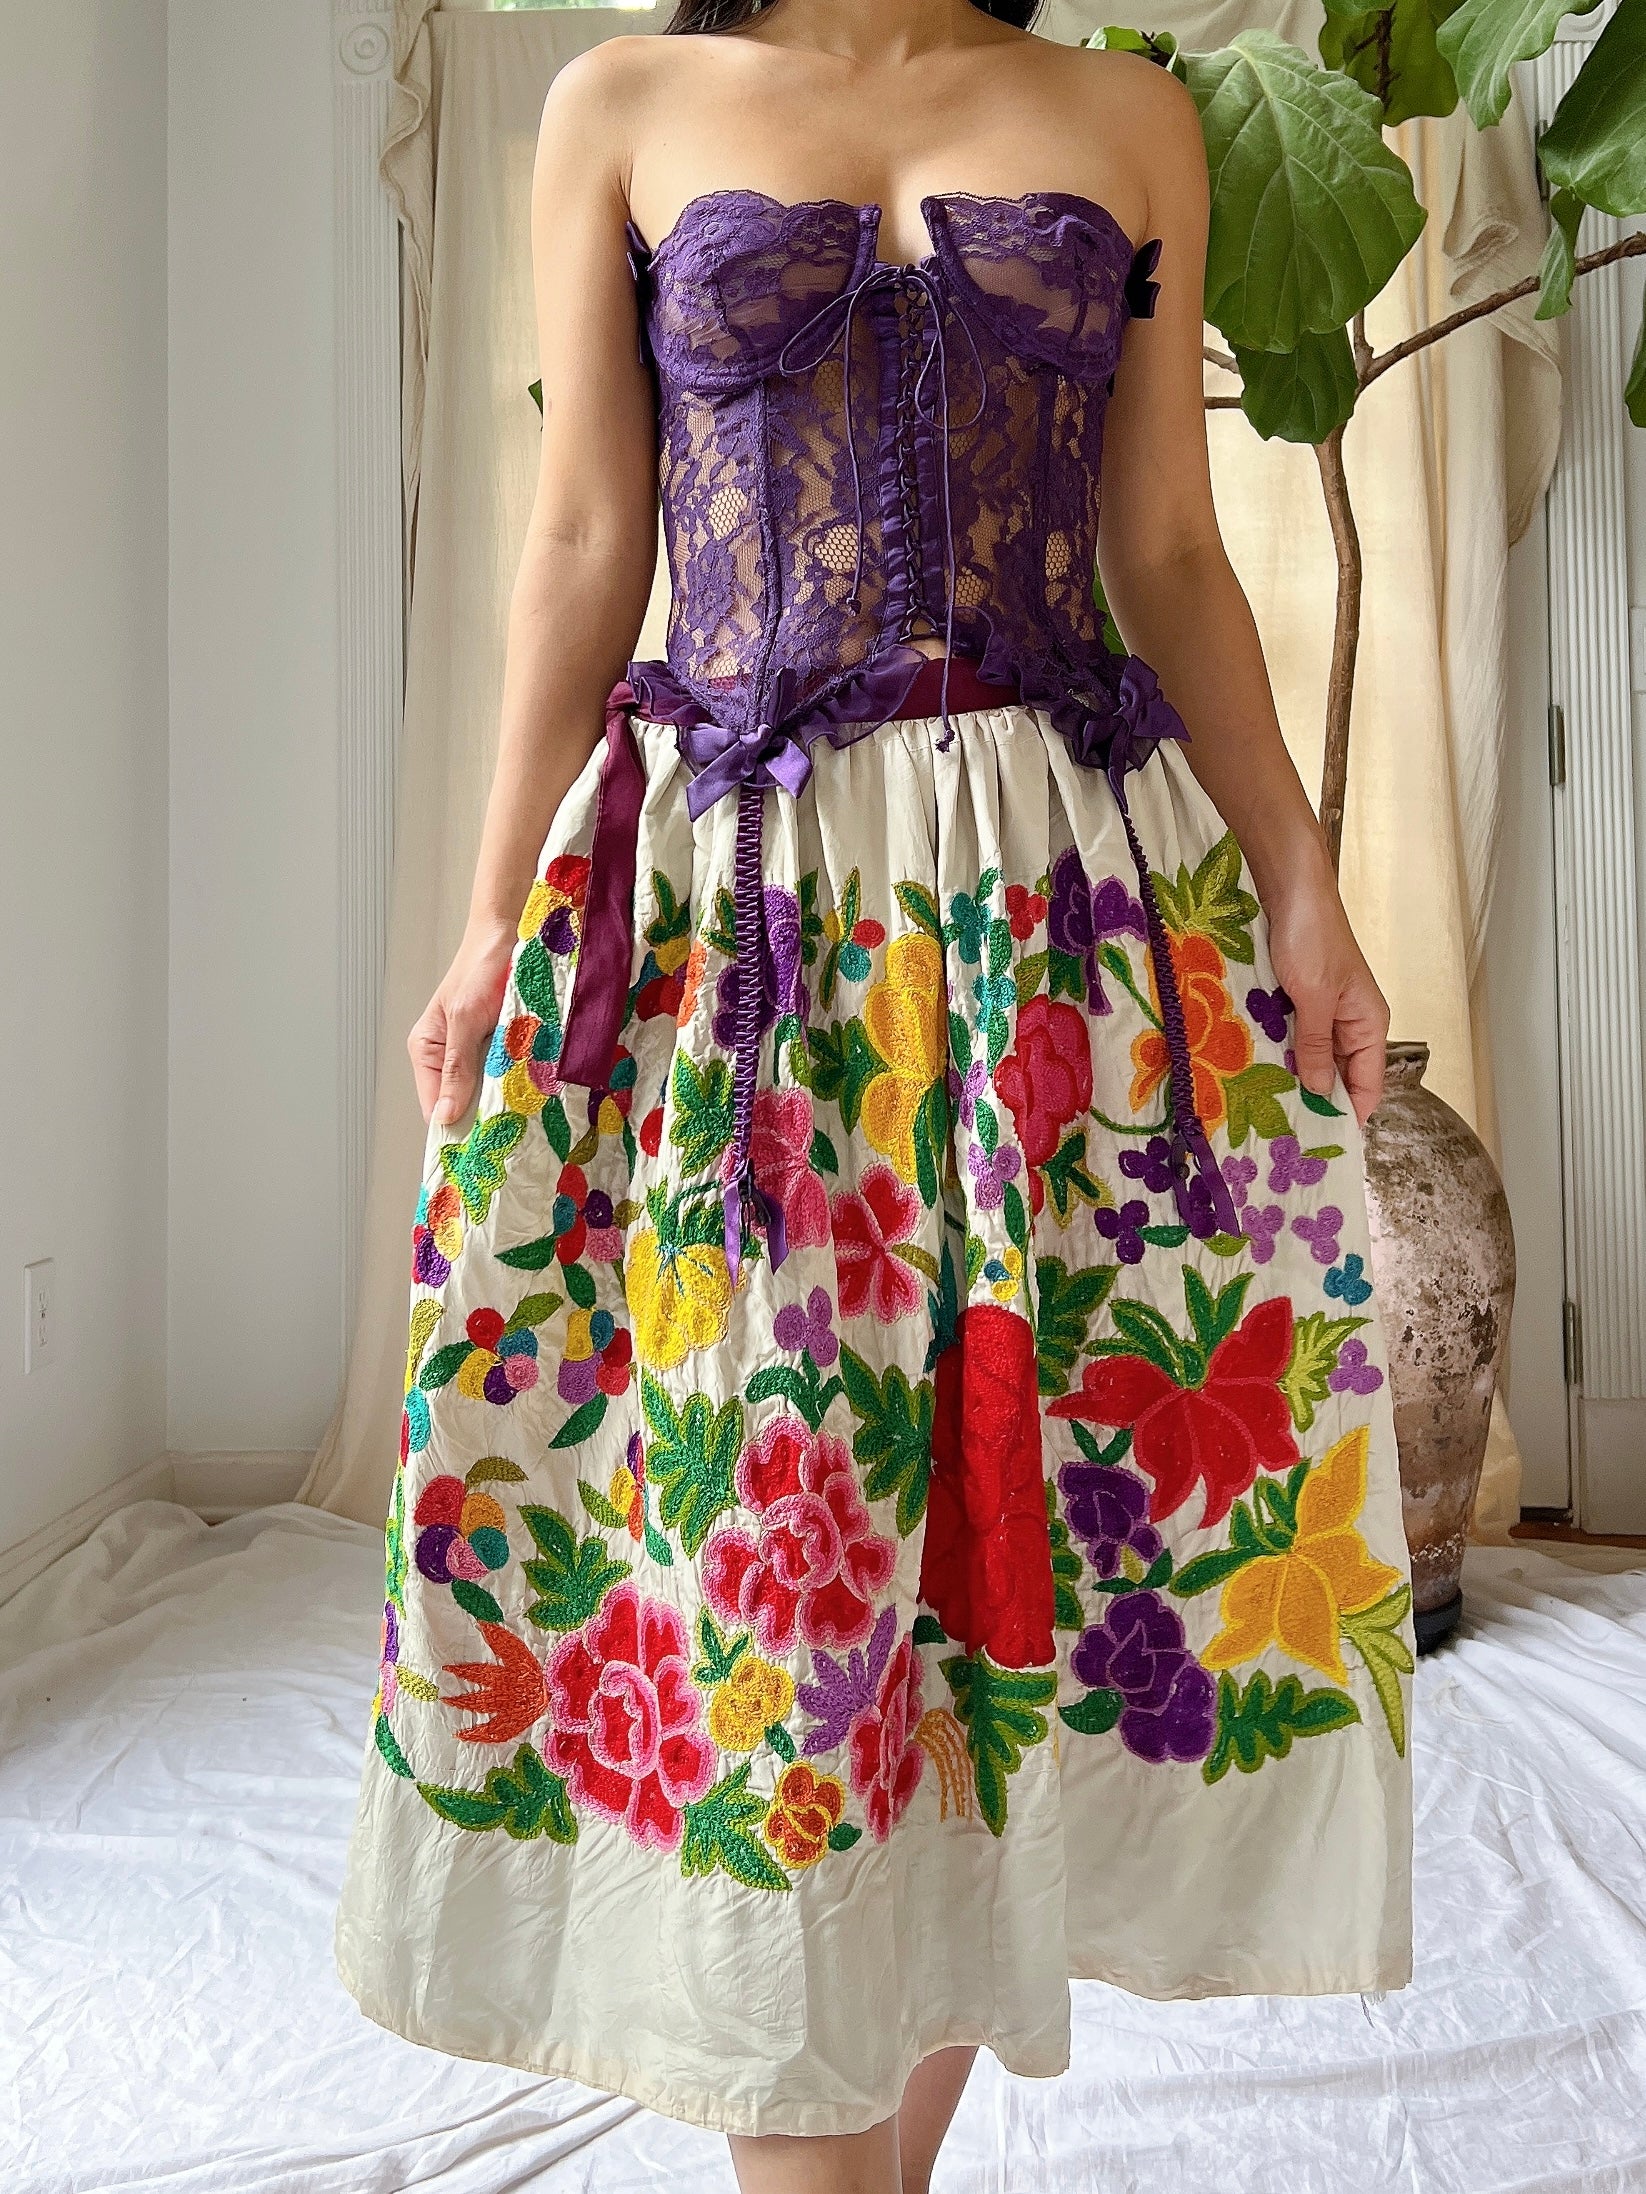 Vintage Rayon Embroidered Skirt - S/M